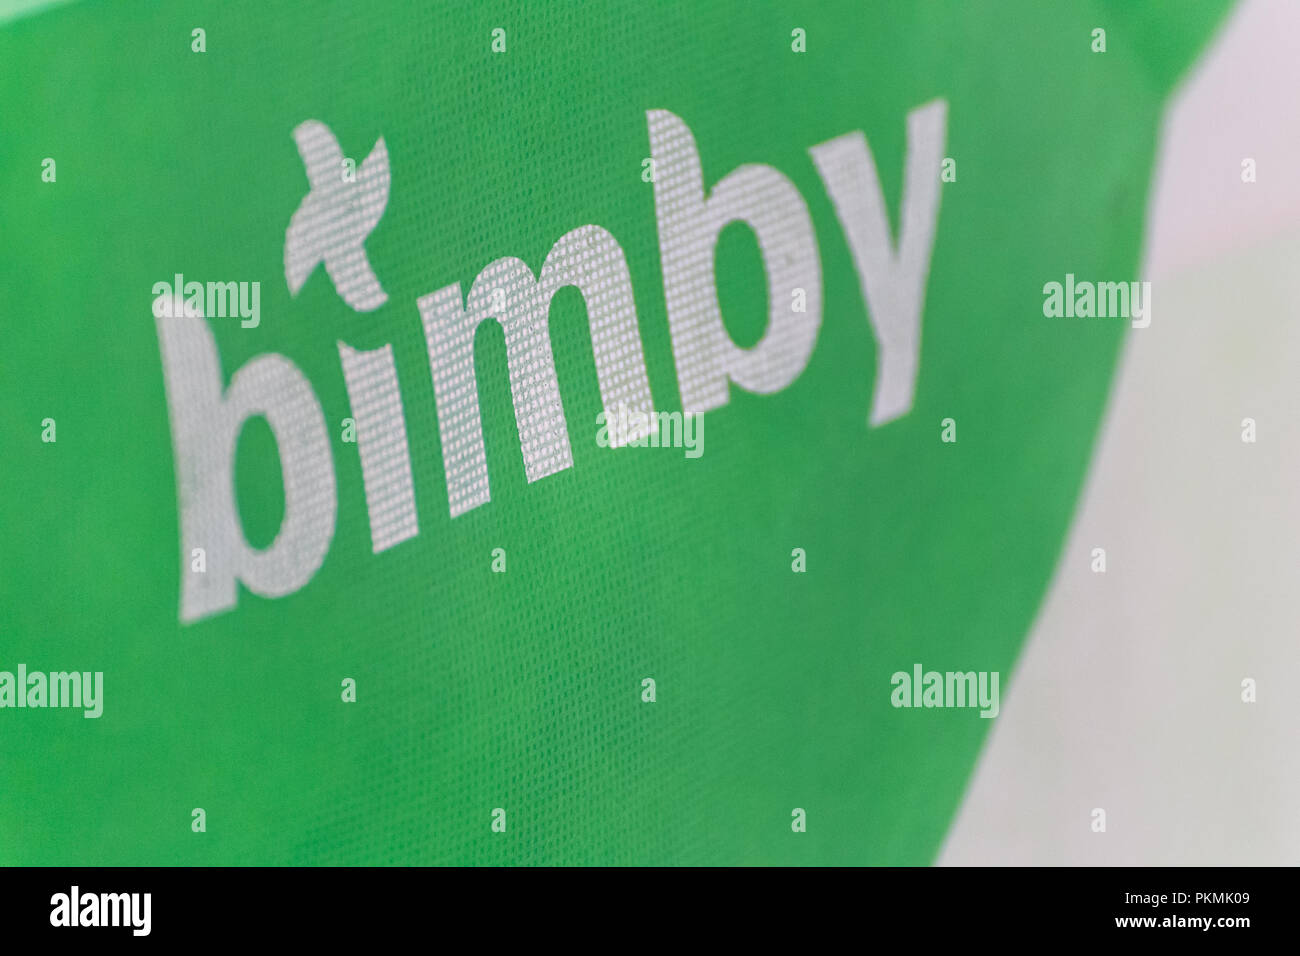 Bimby hi-res stock photography and images - Alamy